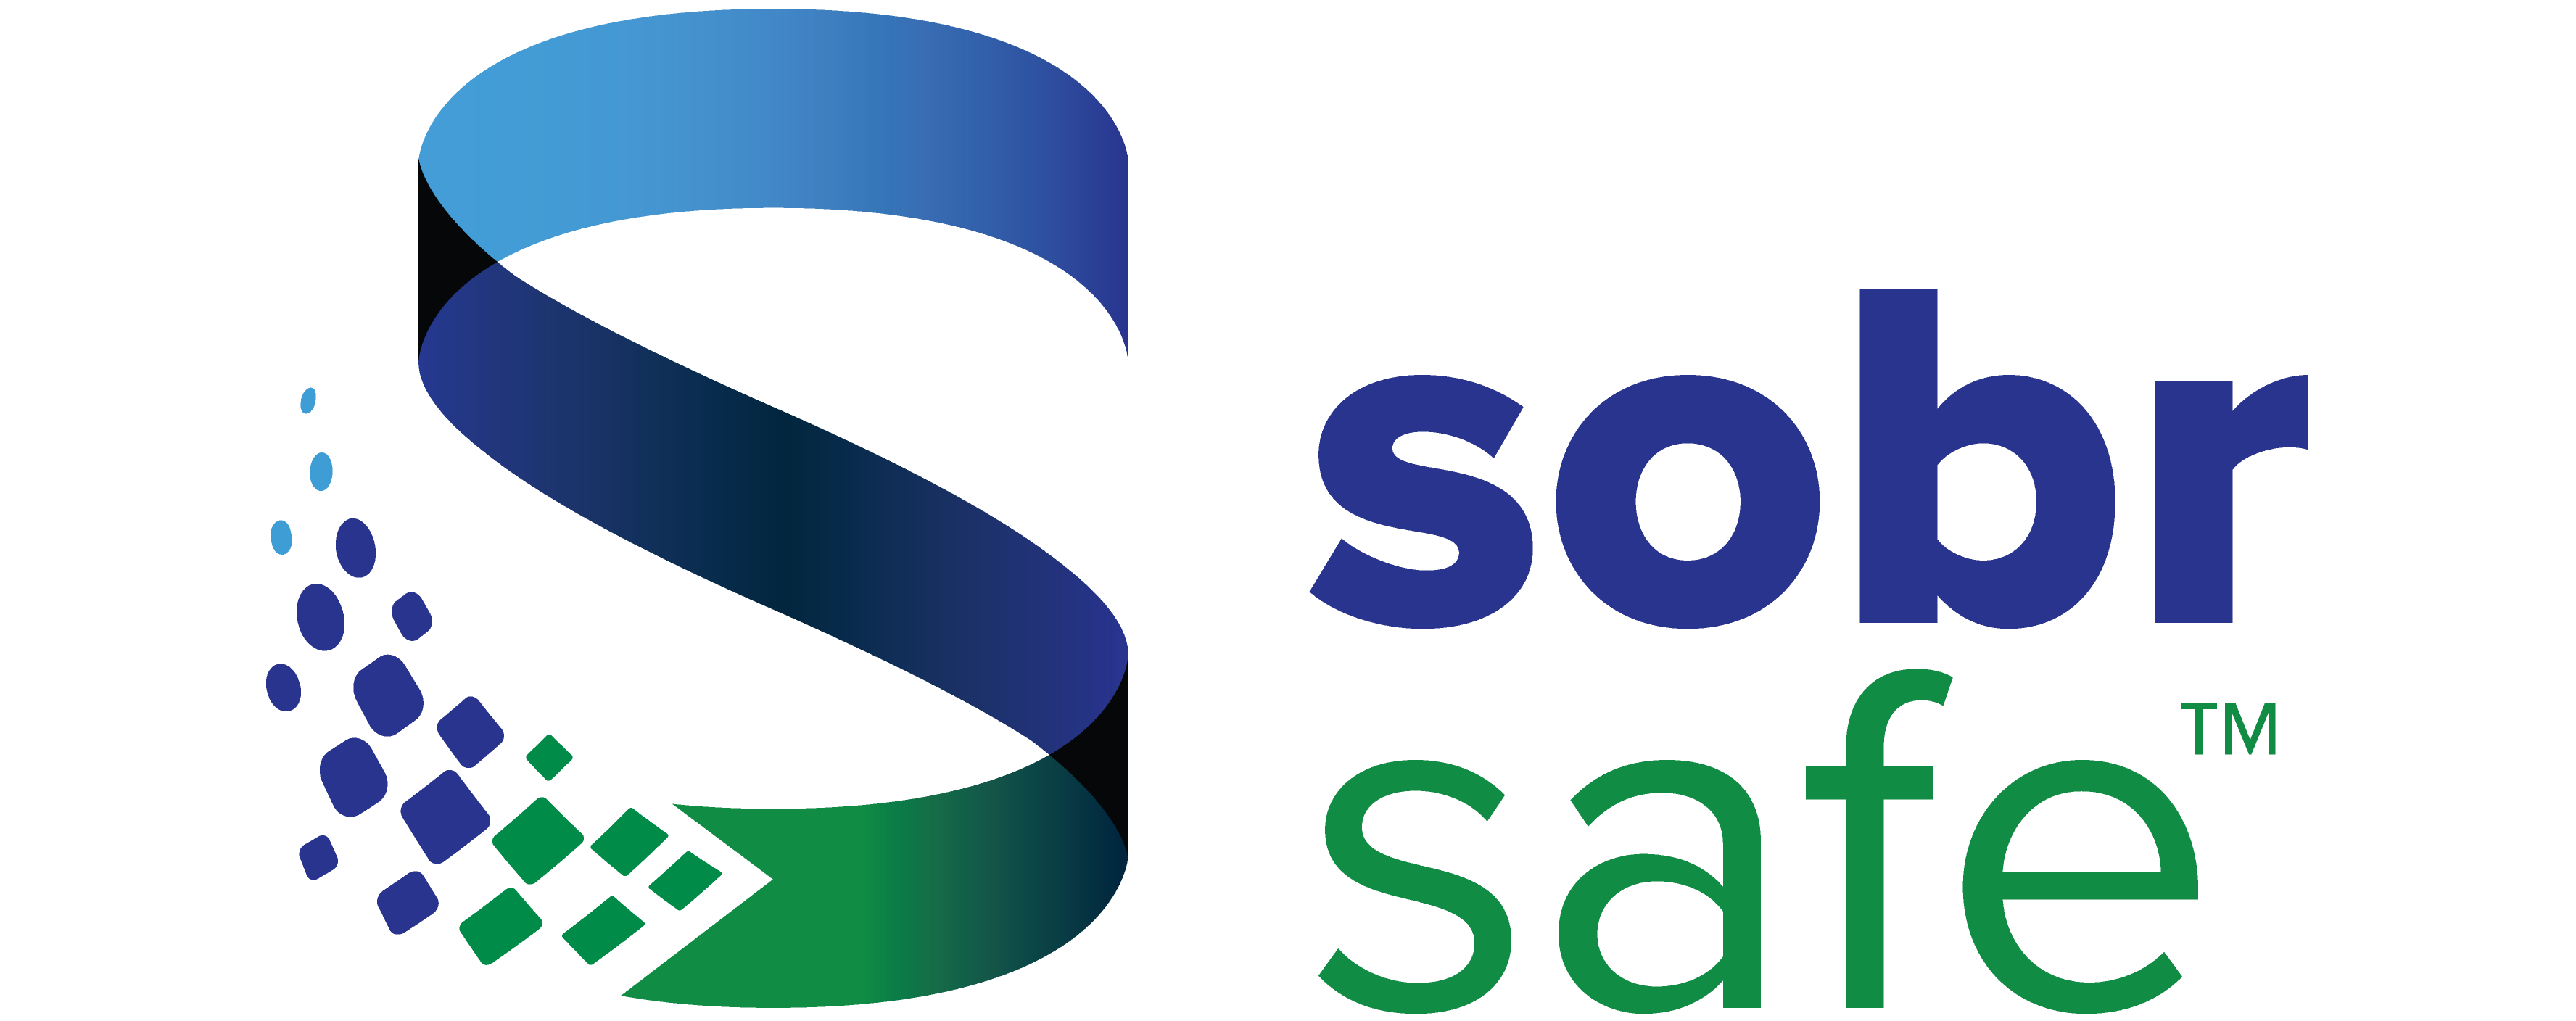 SOBR Safe Inc. Expedites SOBRcheck Adoption Among North American Indian Nations After Inking Initial Deal ($SOBR)